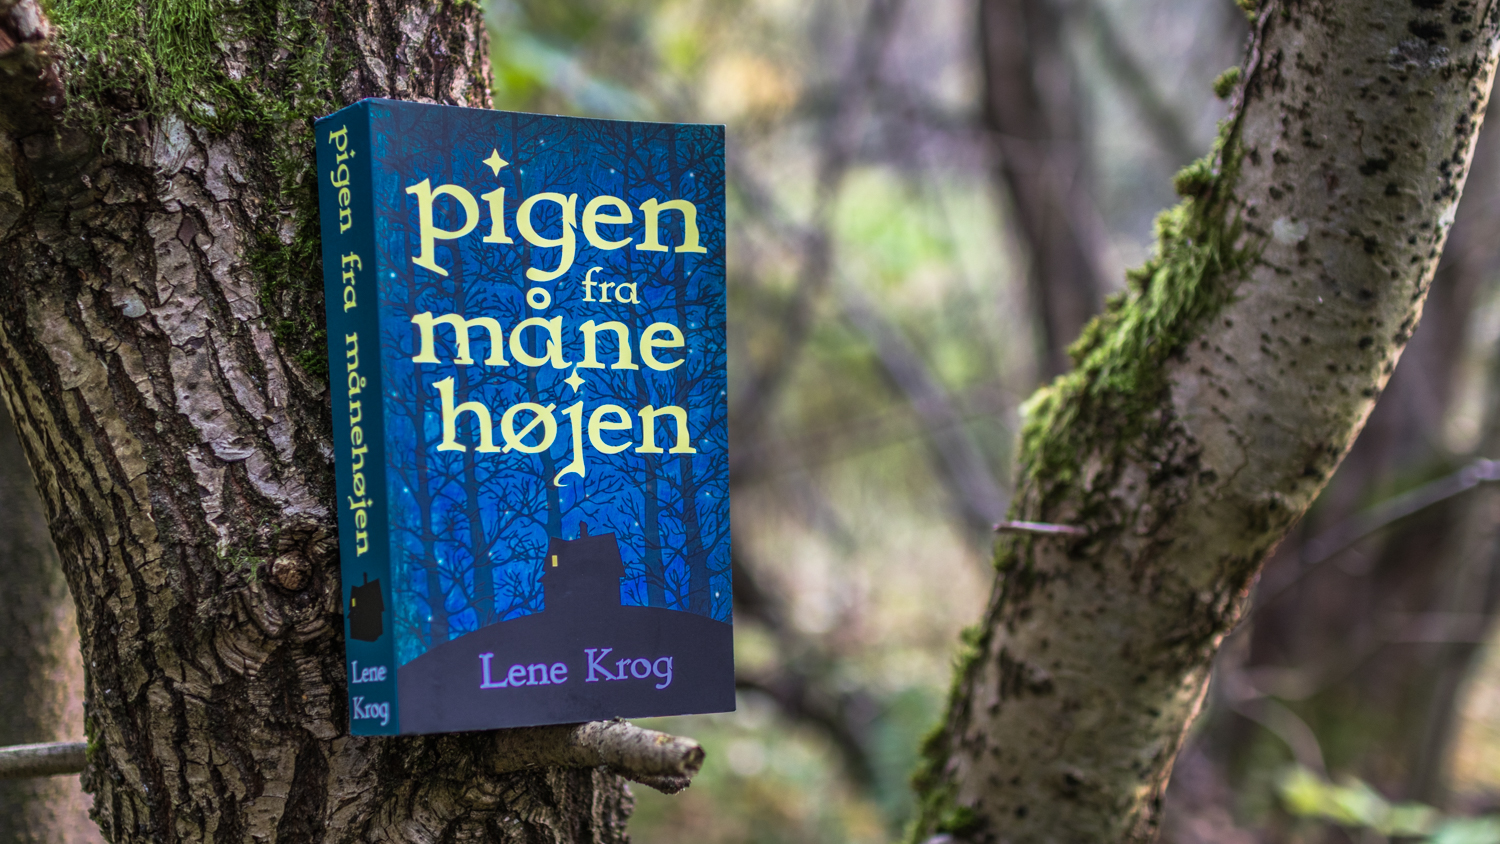 The book Pigen fra Månehøjen on a tree branch